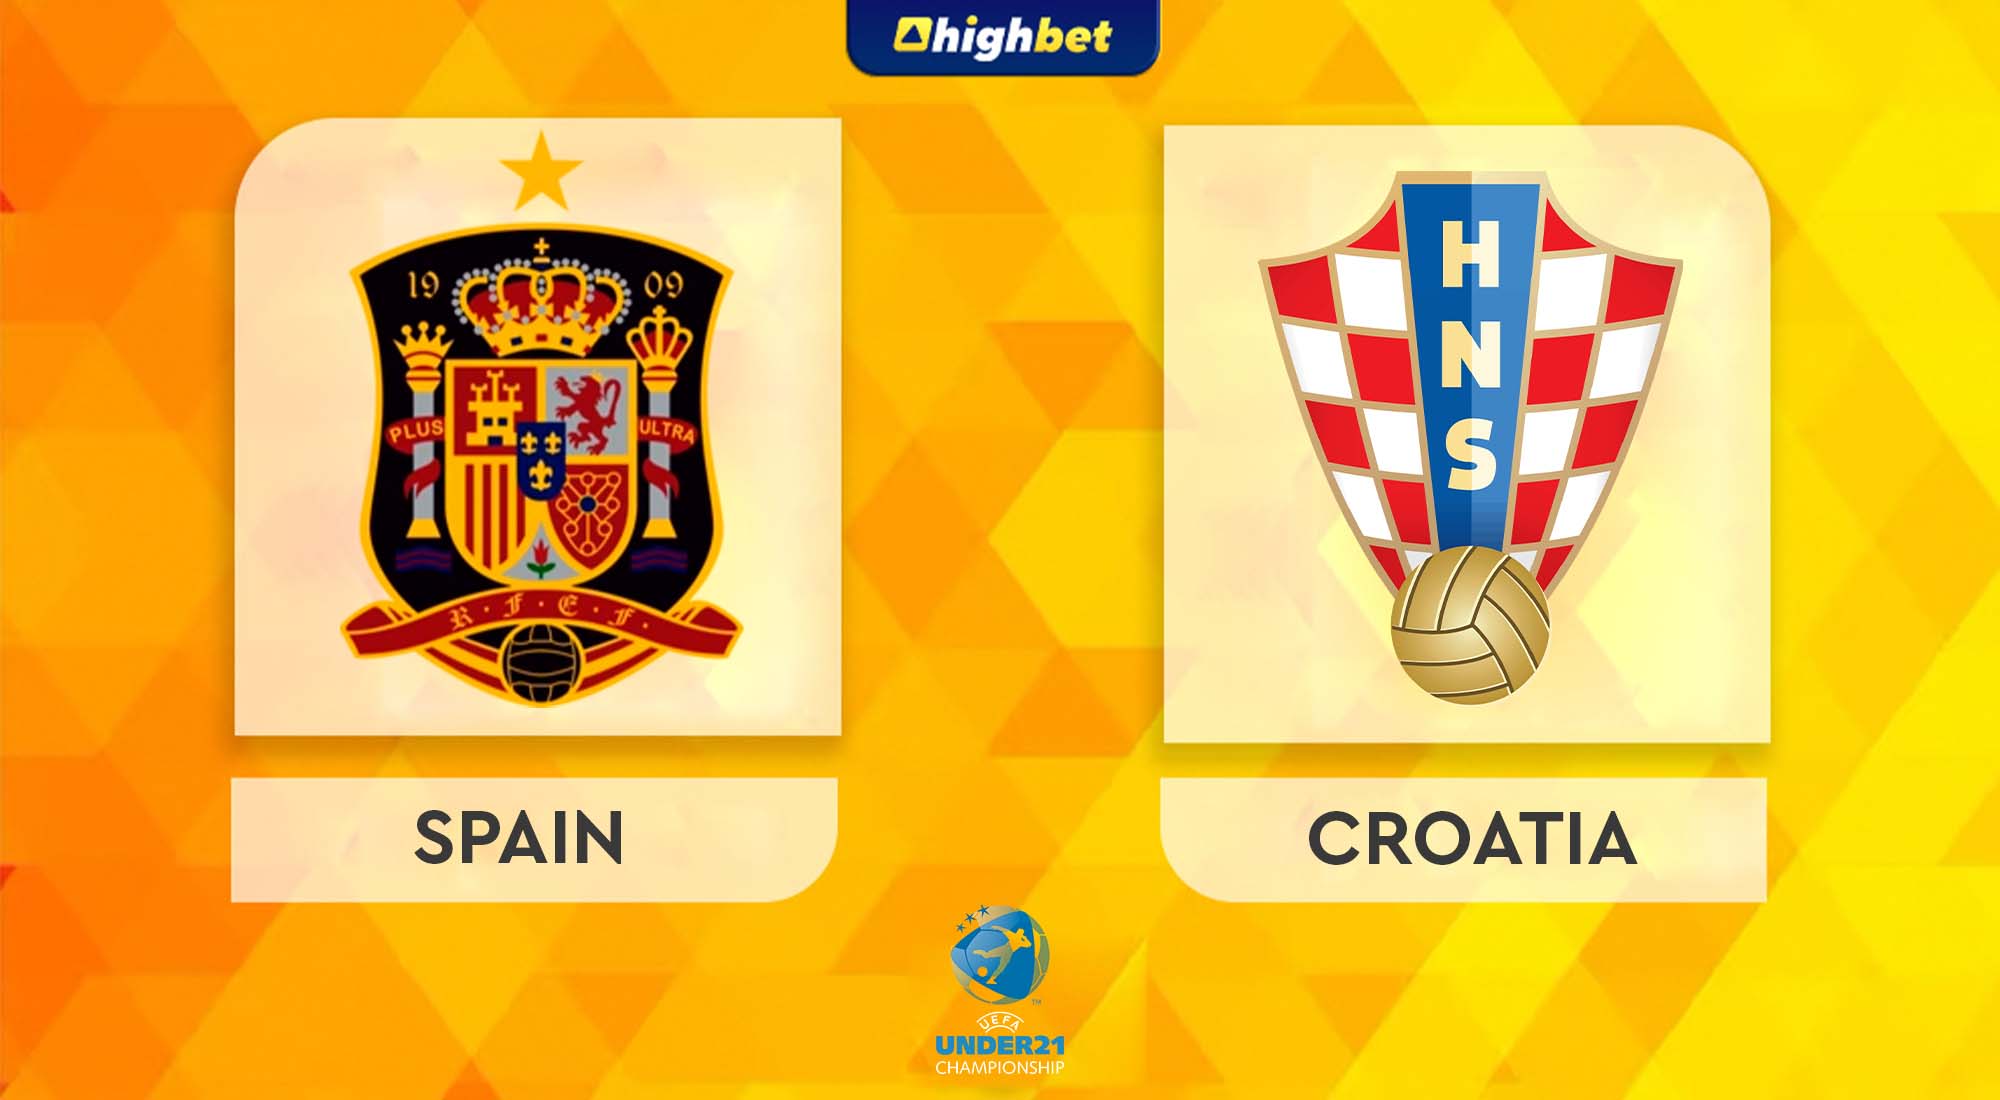 Spain vs Croatia - highbet UEFA European Under-21 Championship Pre-Match Analysis